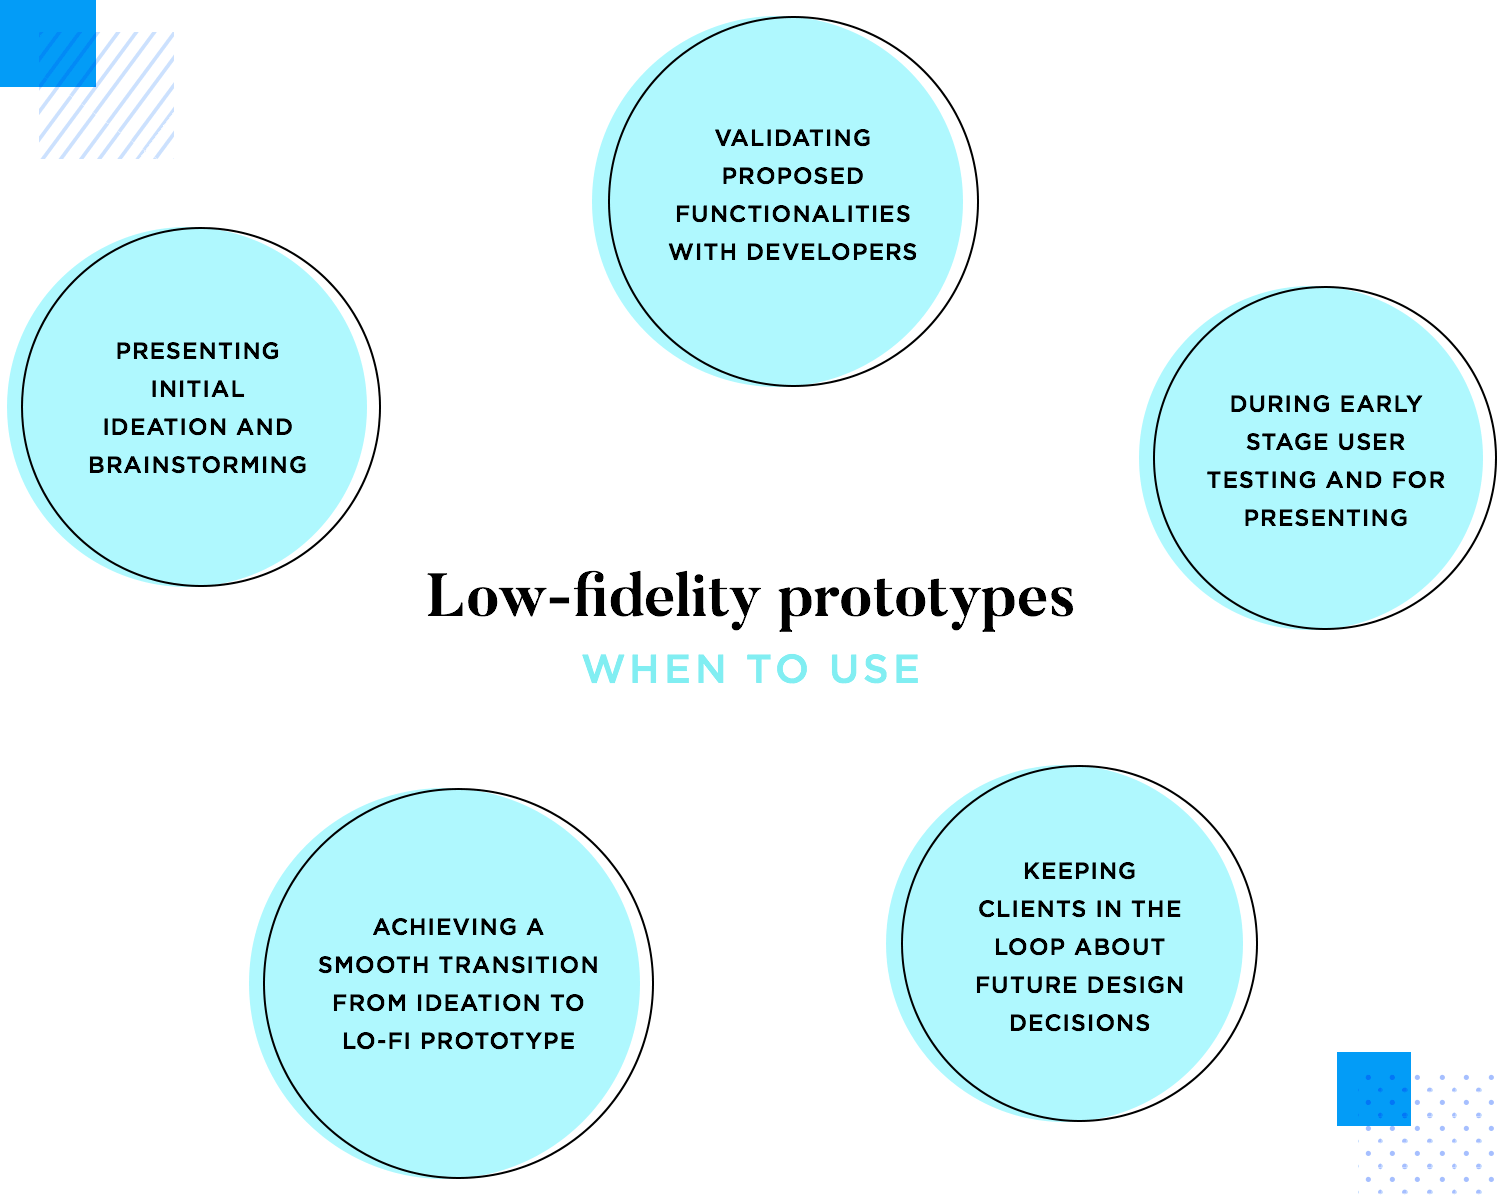 Low fidelity prototypes are useful to brainstorm design ideas